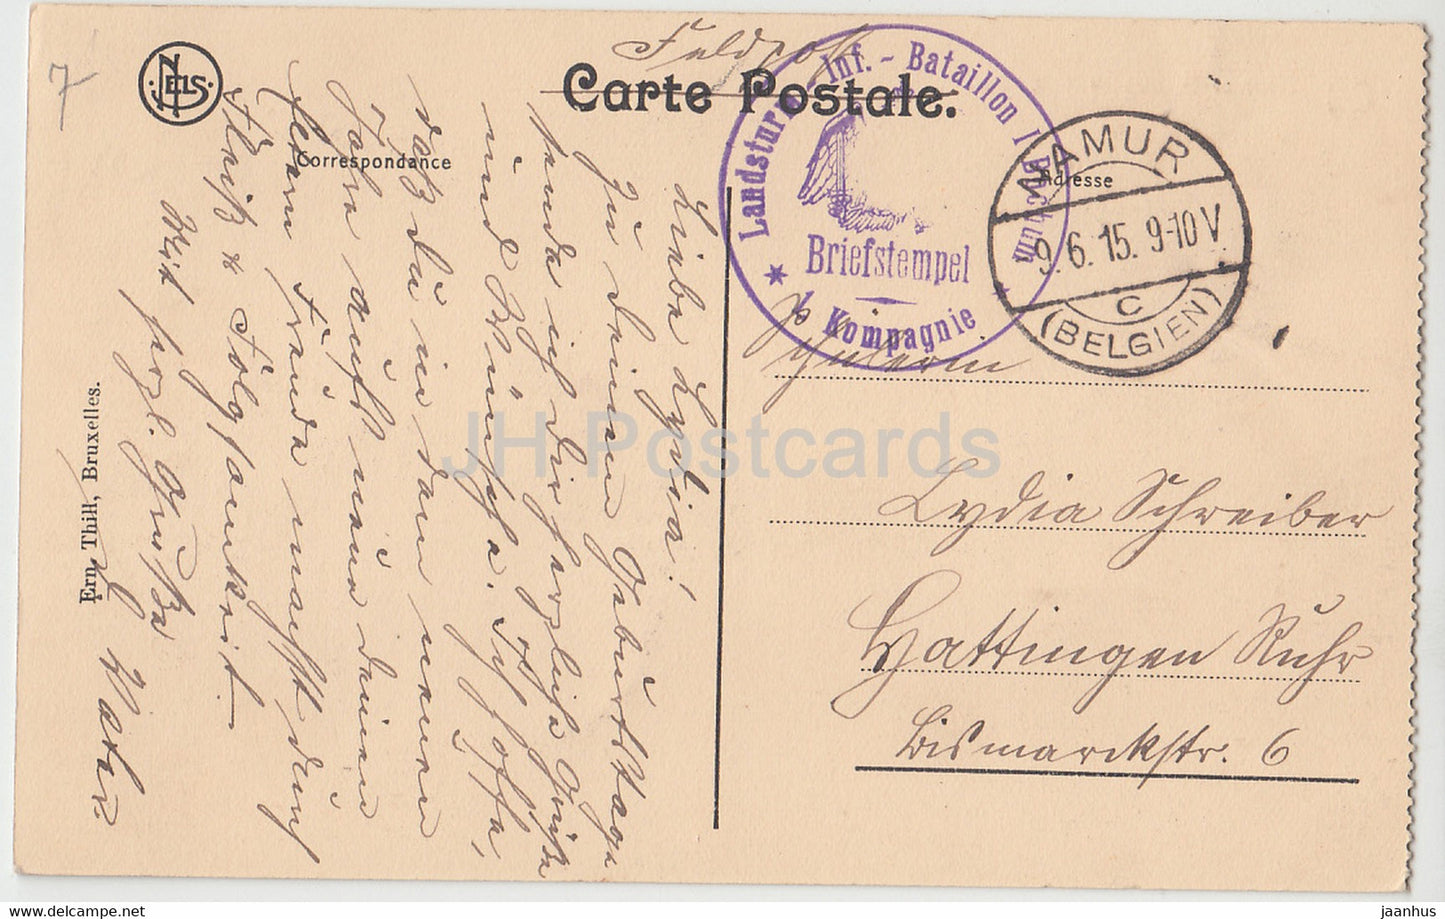 Namur - Citadelle - Le Parc - Landsturm Inf Bataillon I Bochum - Feldpost - old postcard - 1915 - Belgium - used